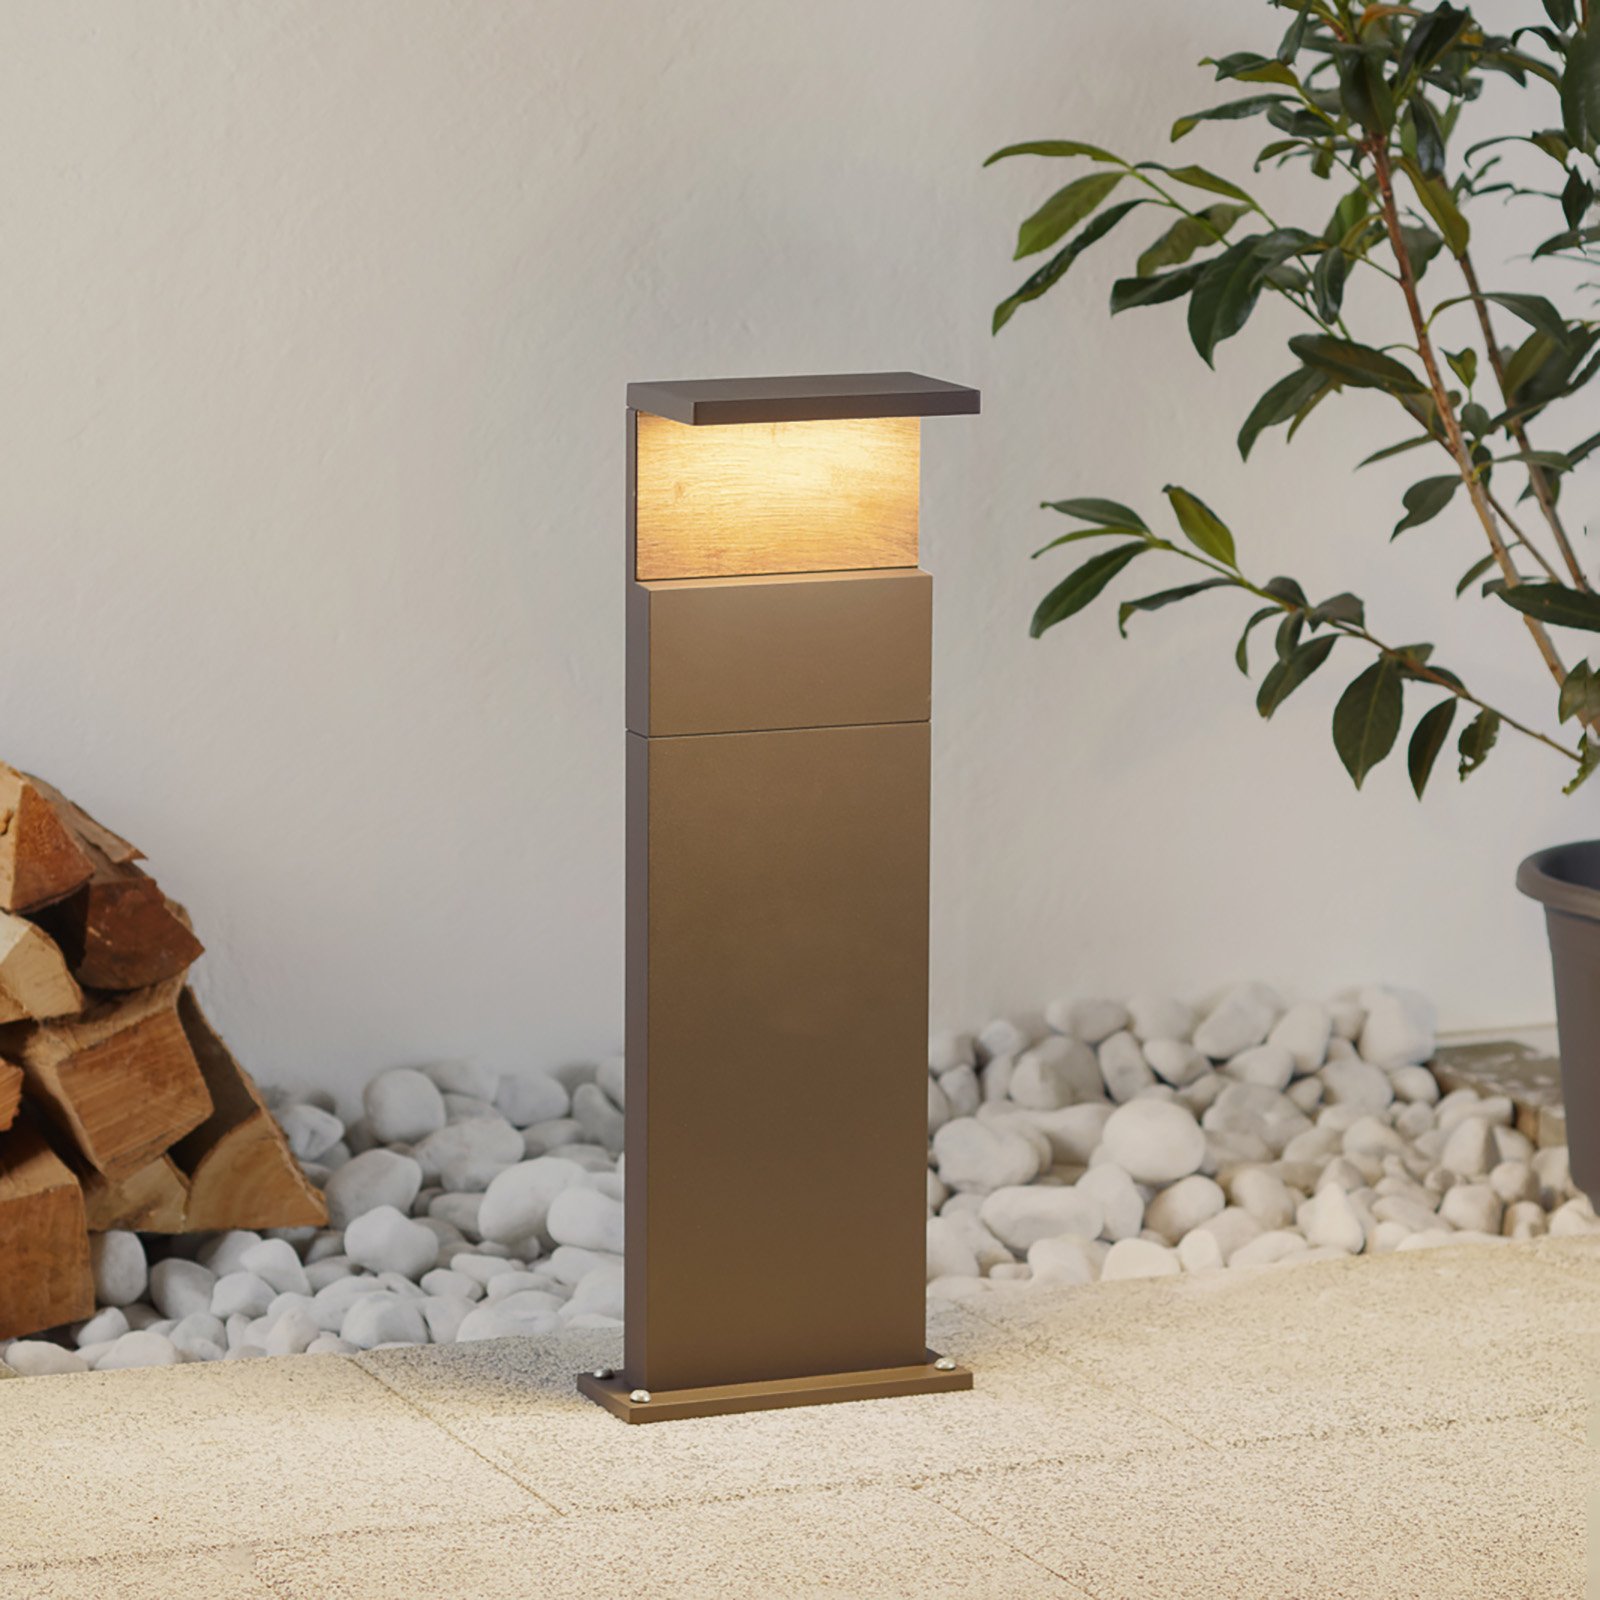 Ruka bolardo luminoso LED con Element de madera, 60 cm